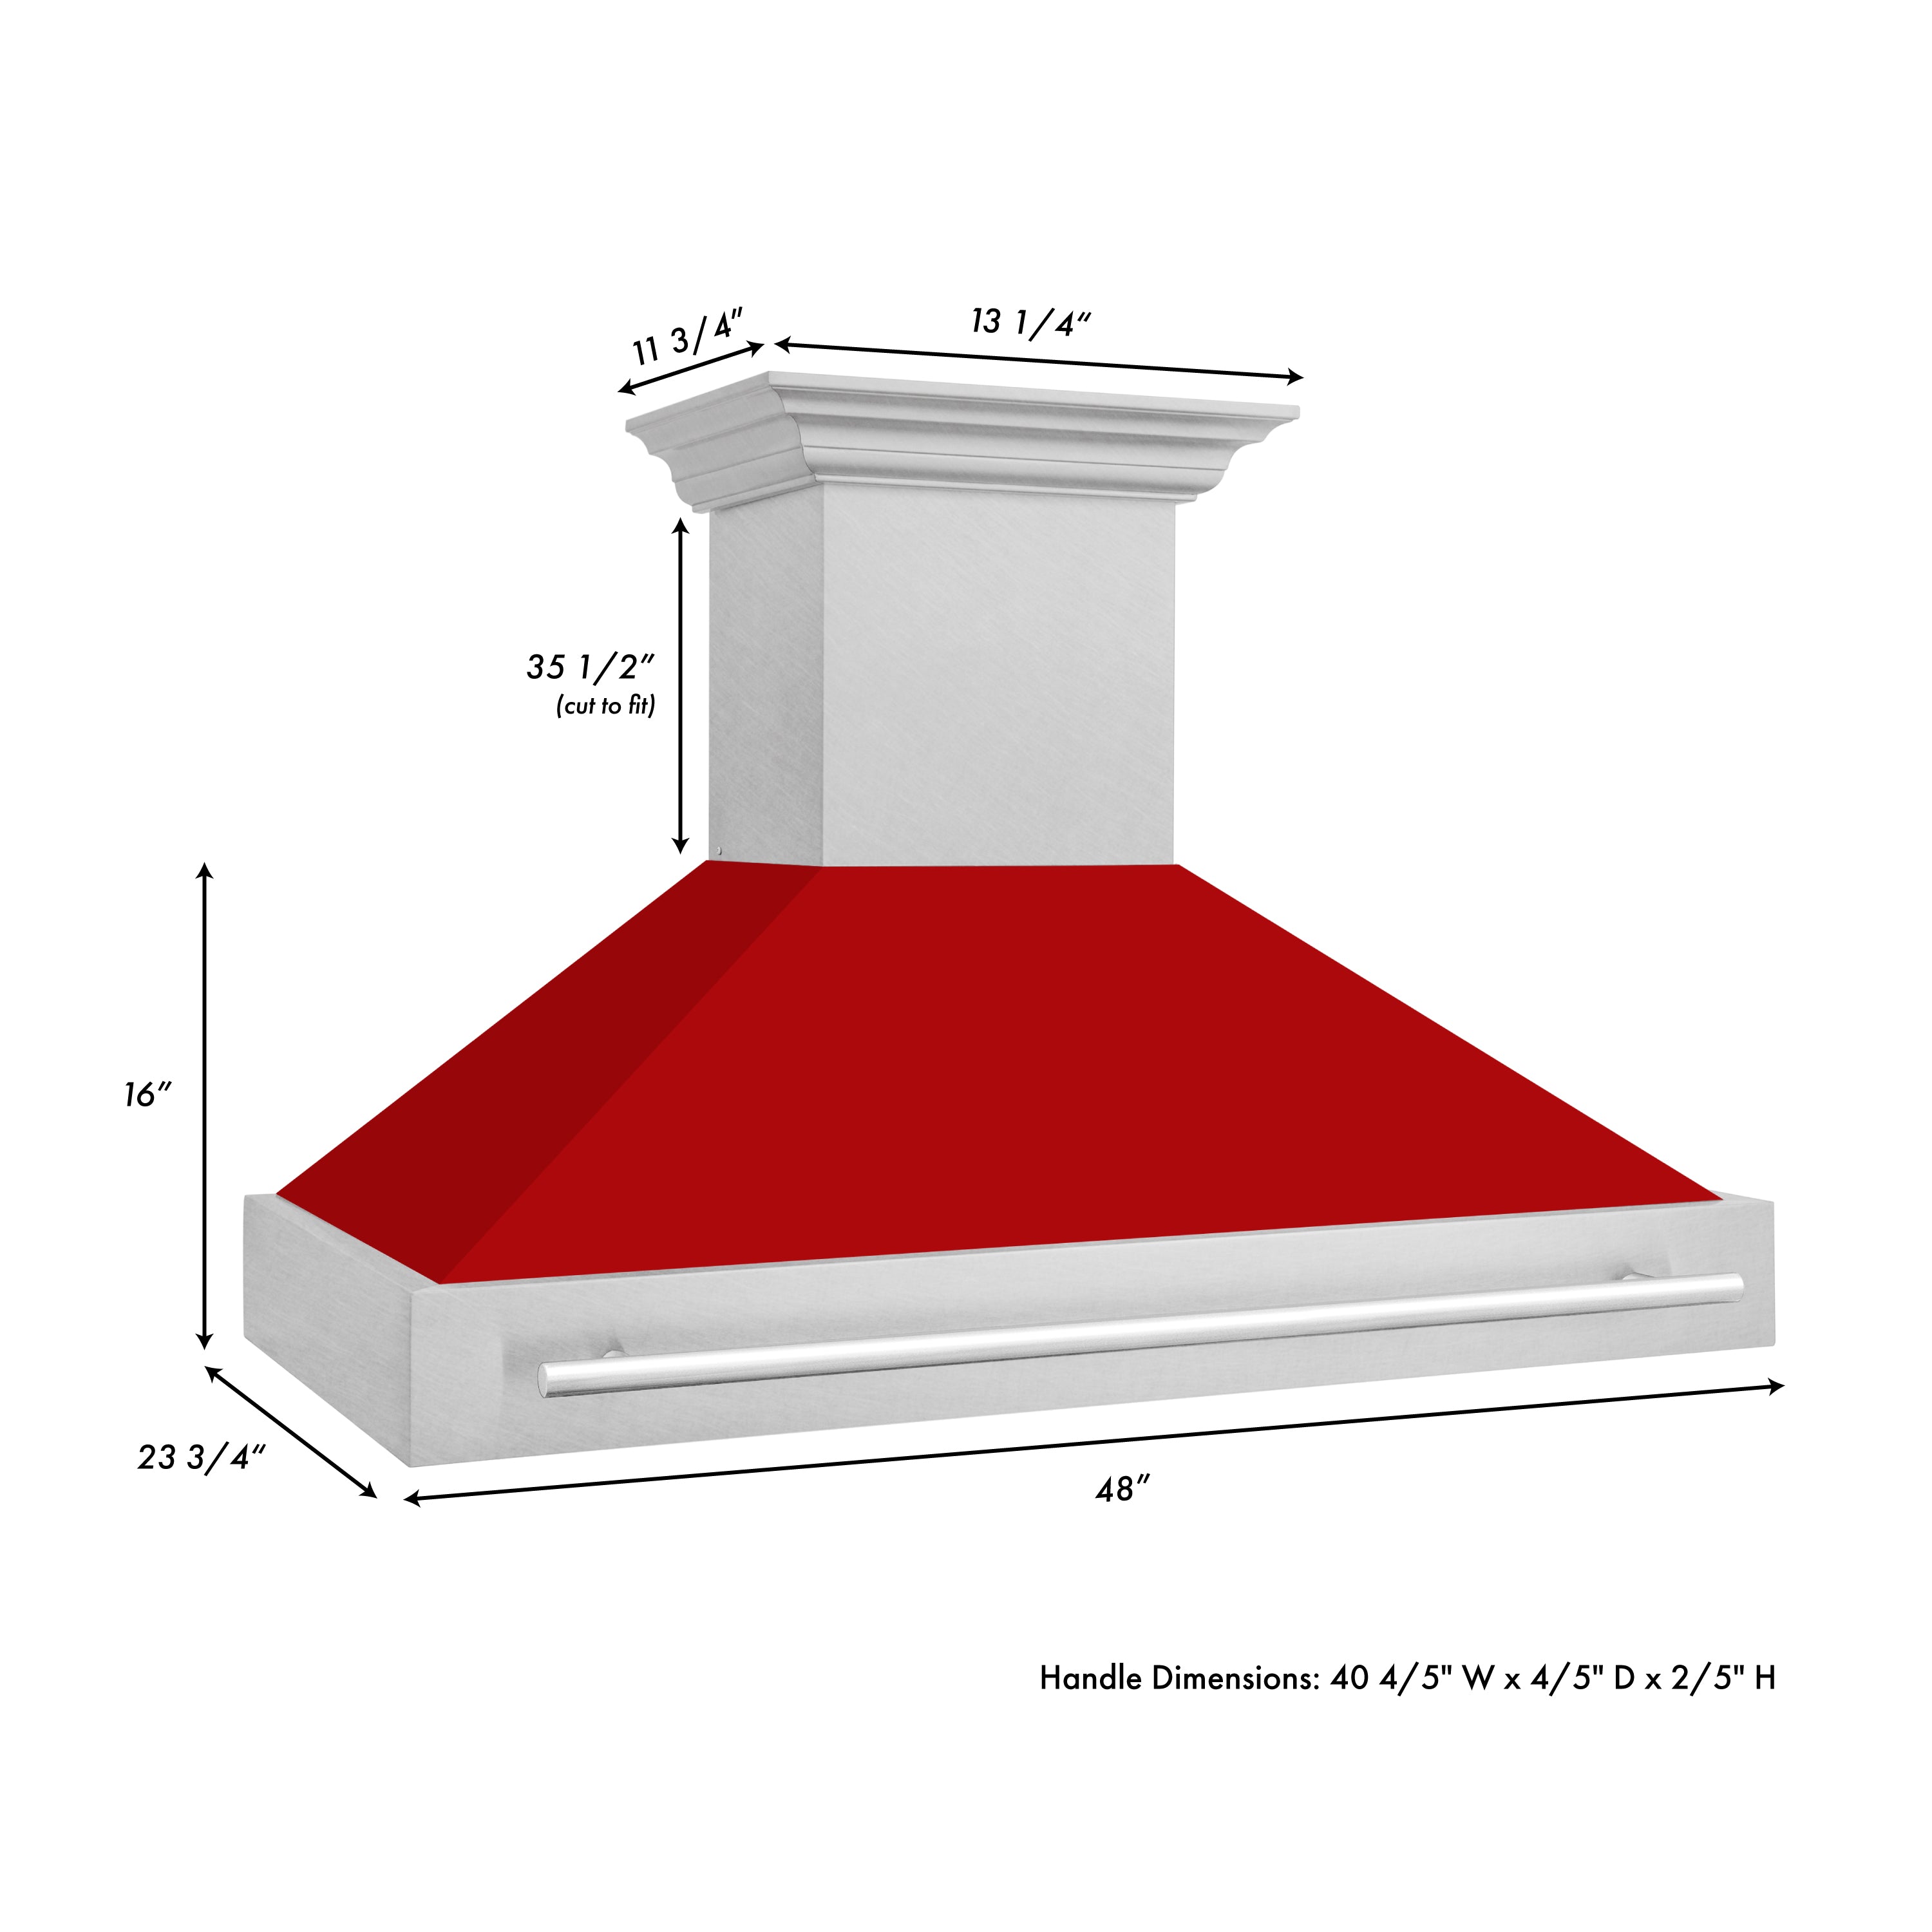 ZLINE 48 in. Fingerprint Resistant Stainless Steel Range Hood with Red Matte shell dimensions.